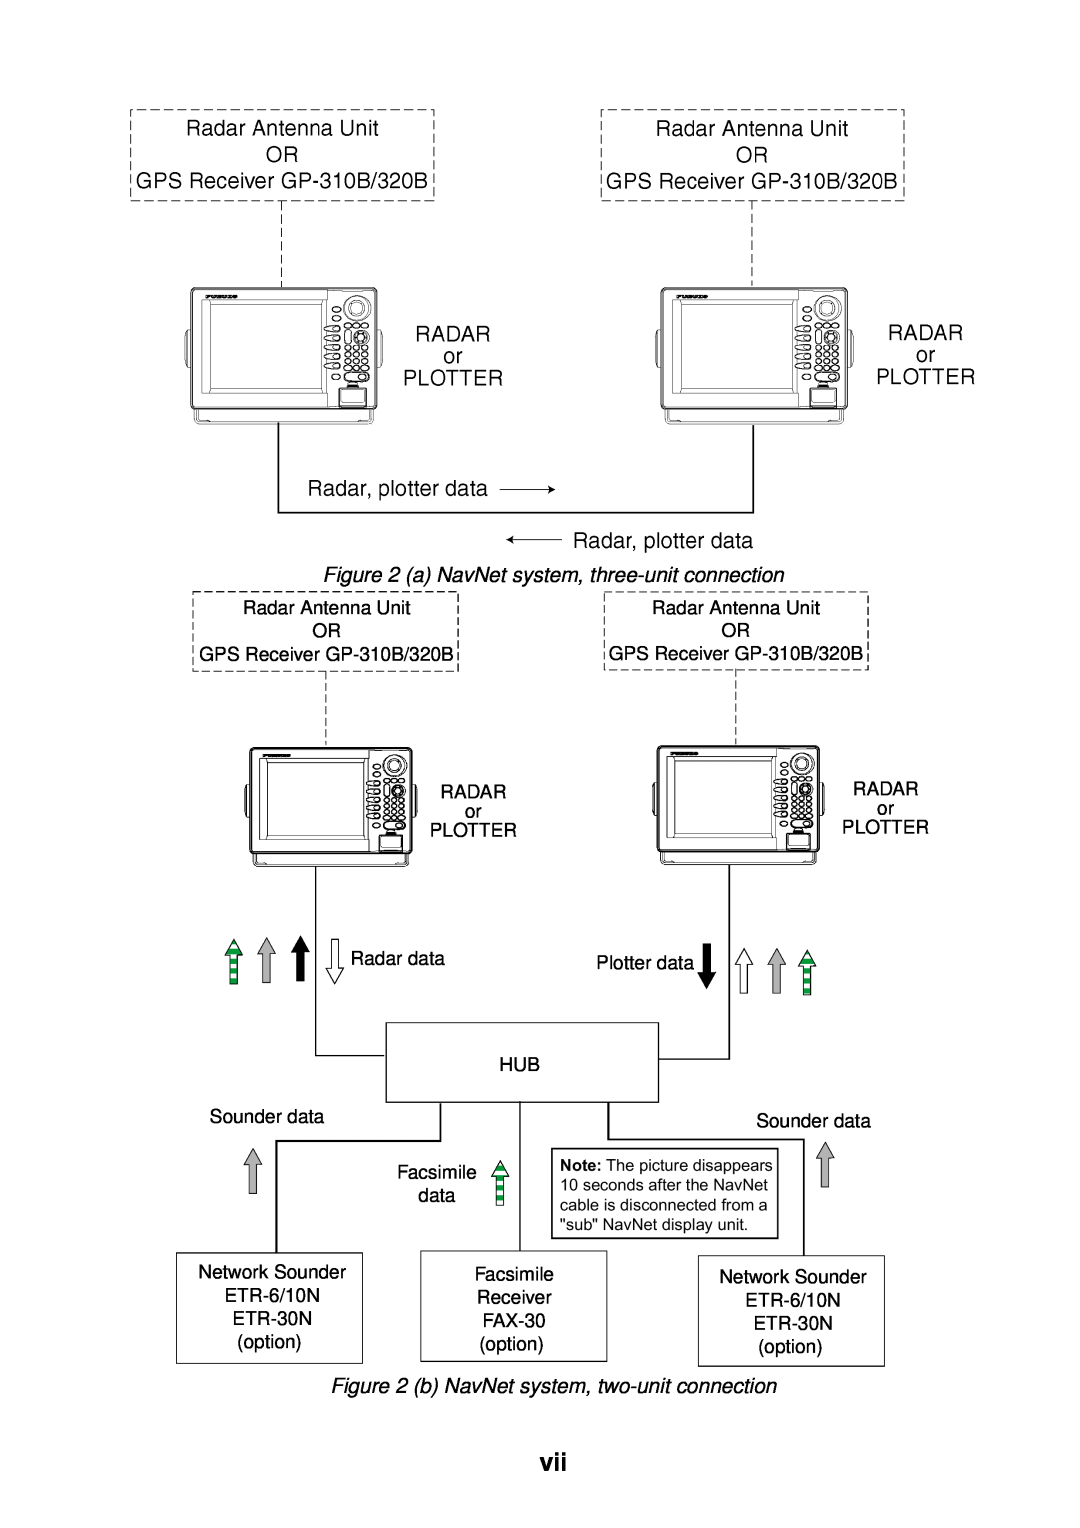 Furuno 1823C, 1933C, 1943C, 1833C, GD-1900C manual a NavNet system, three-unit connection, b NavNet system, two-unit connection 